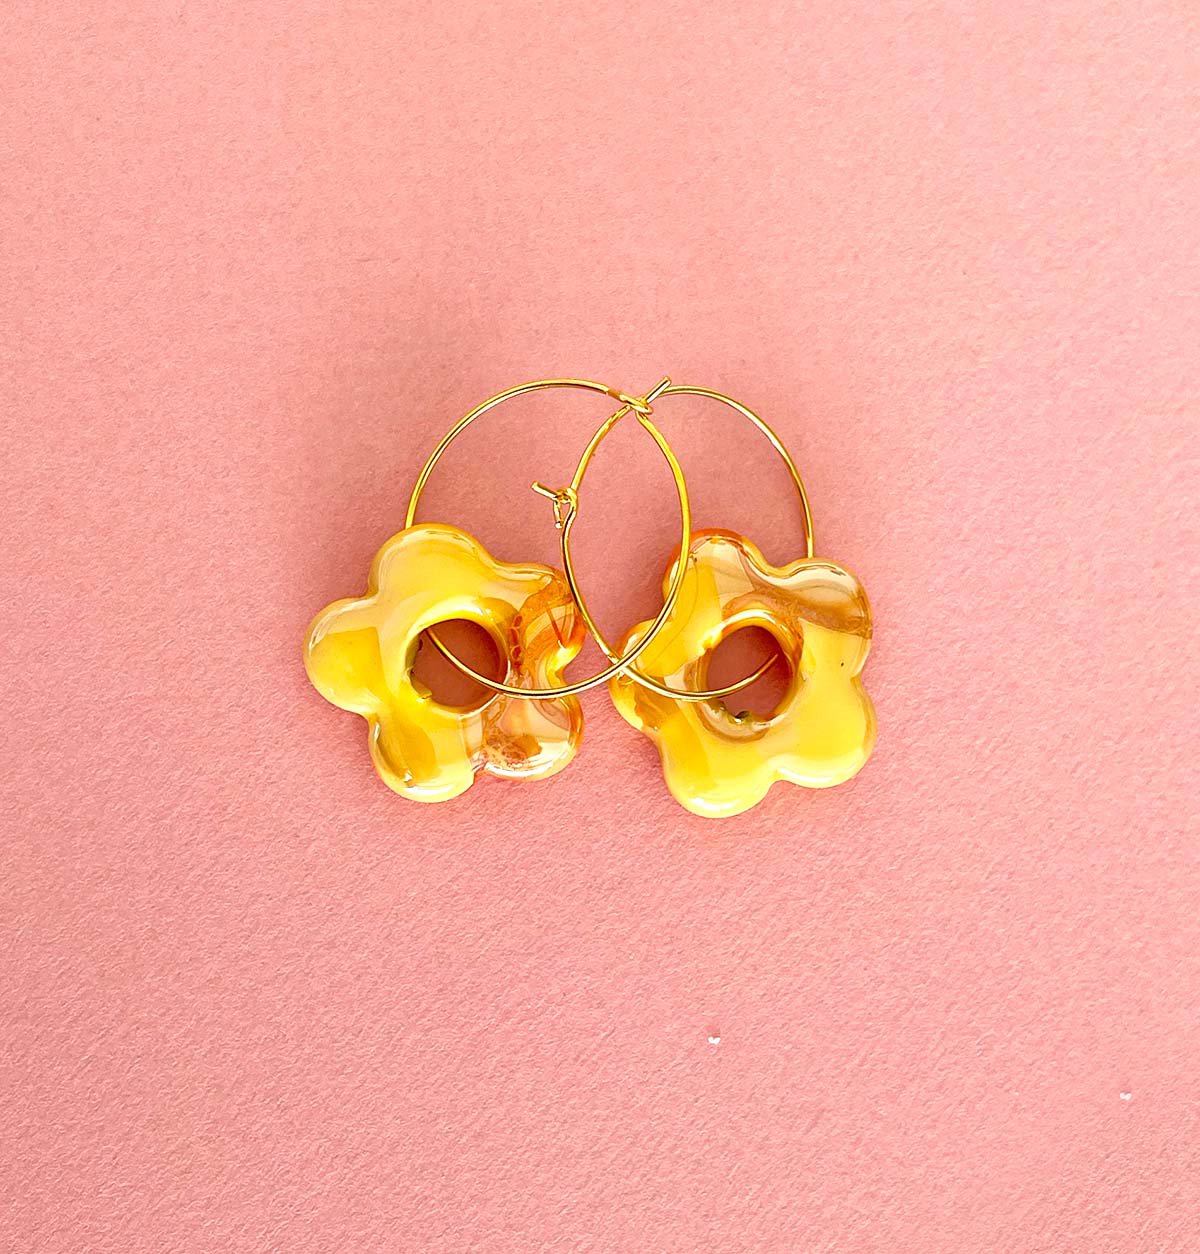 Ceramic earrings hoops yellow flower